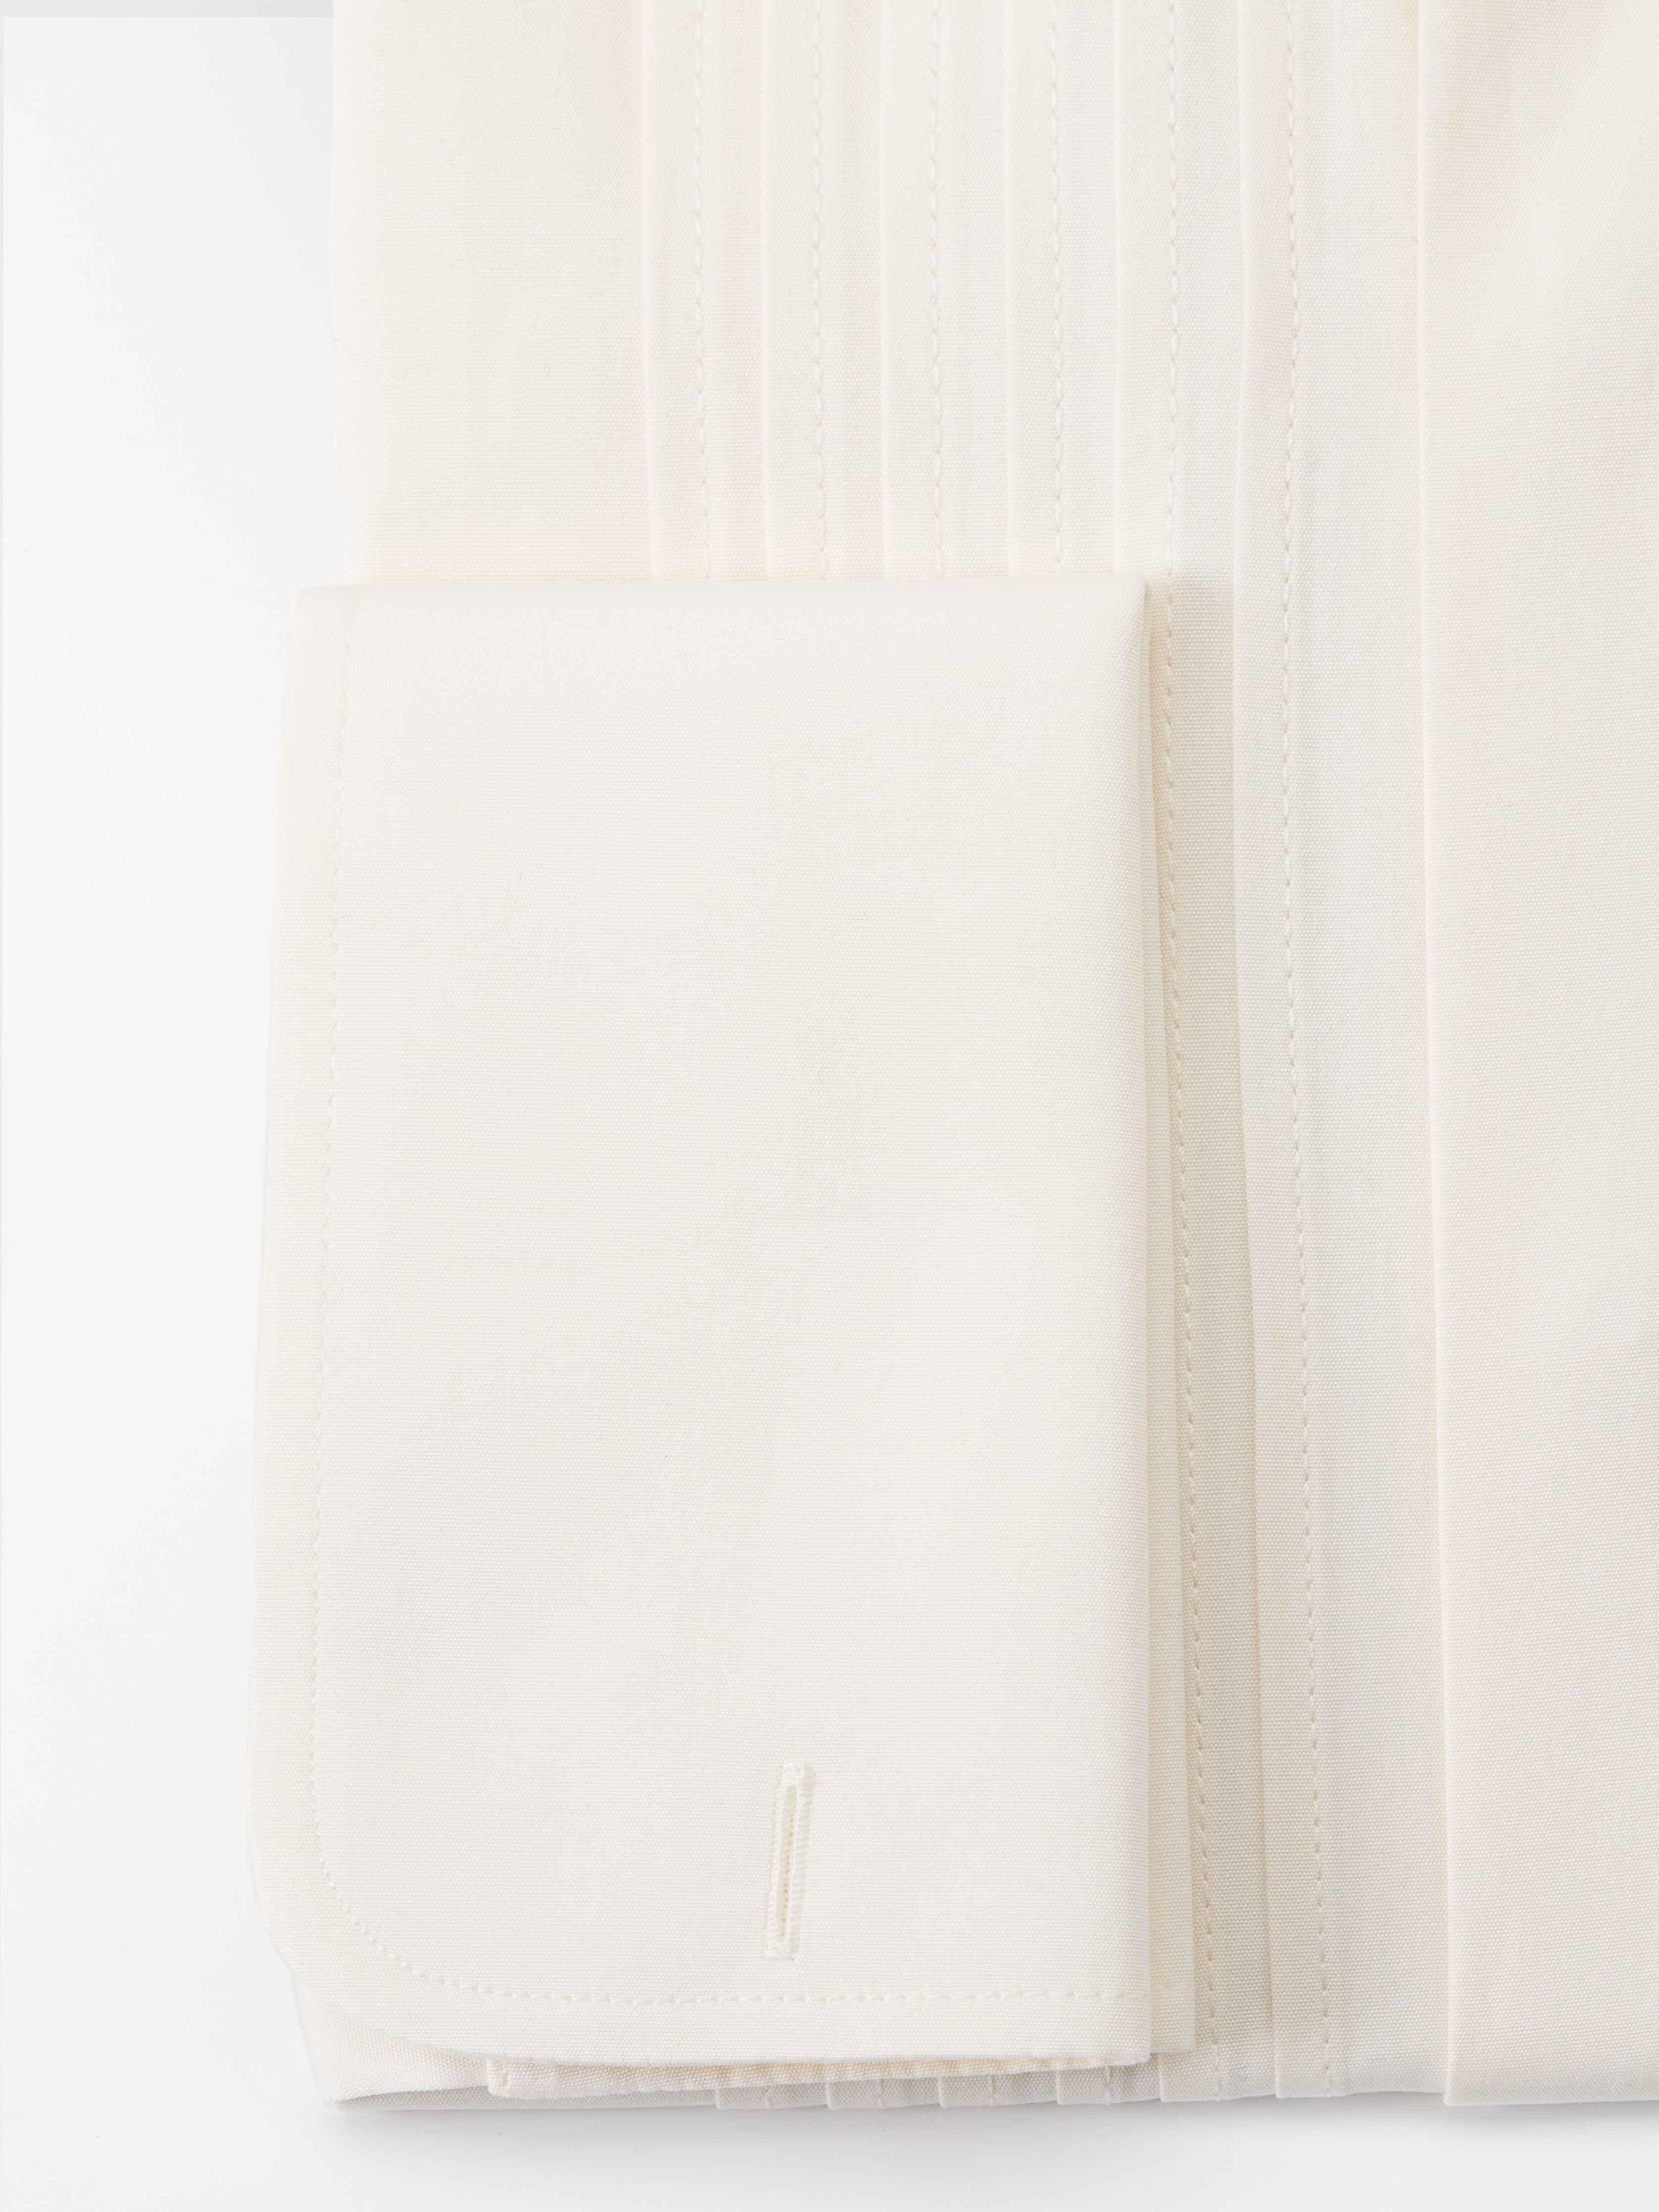 Ivory Poplin Cotton Pleated Pintuck Dress Shirt